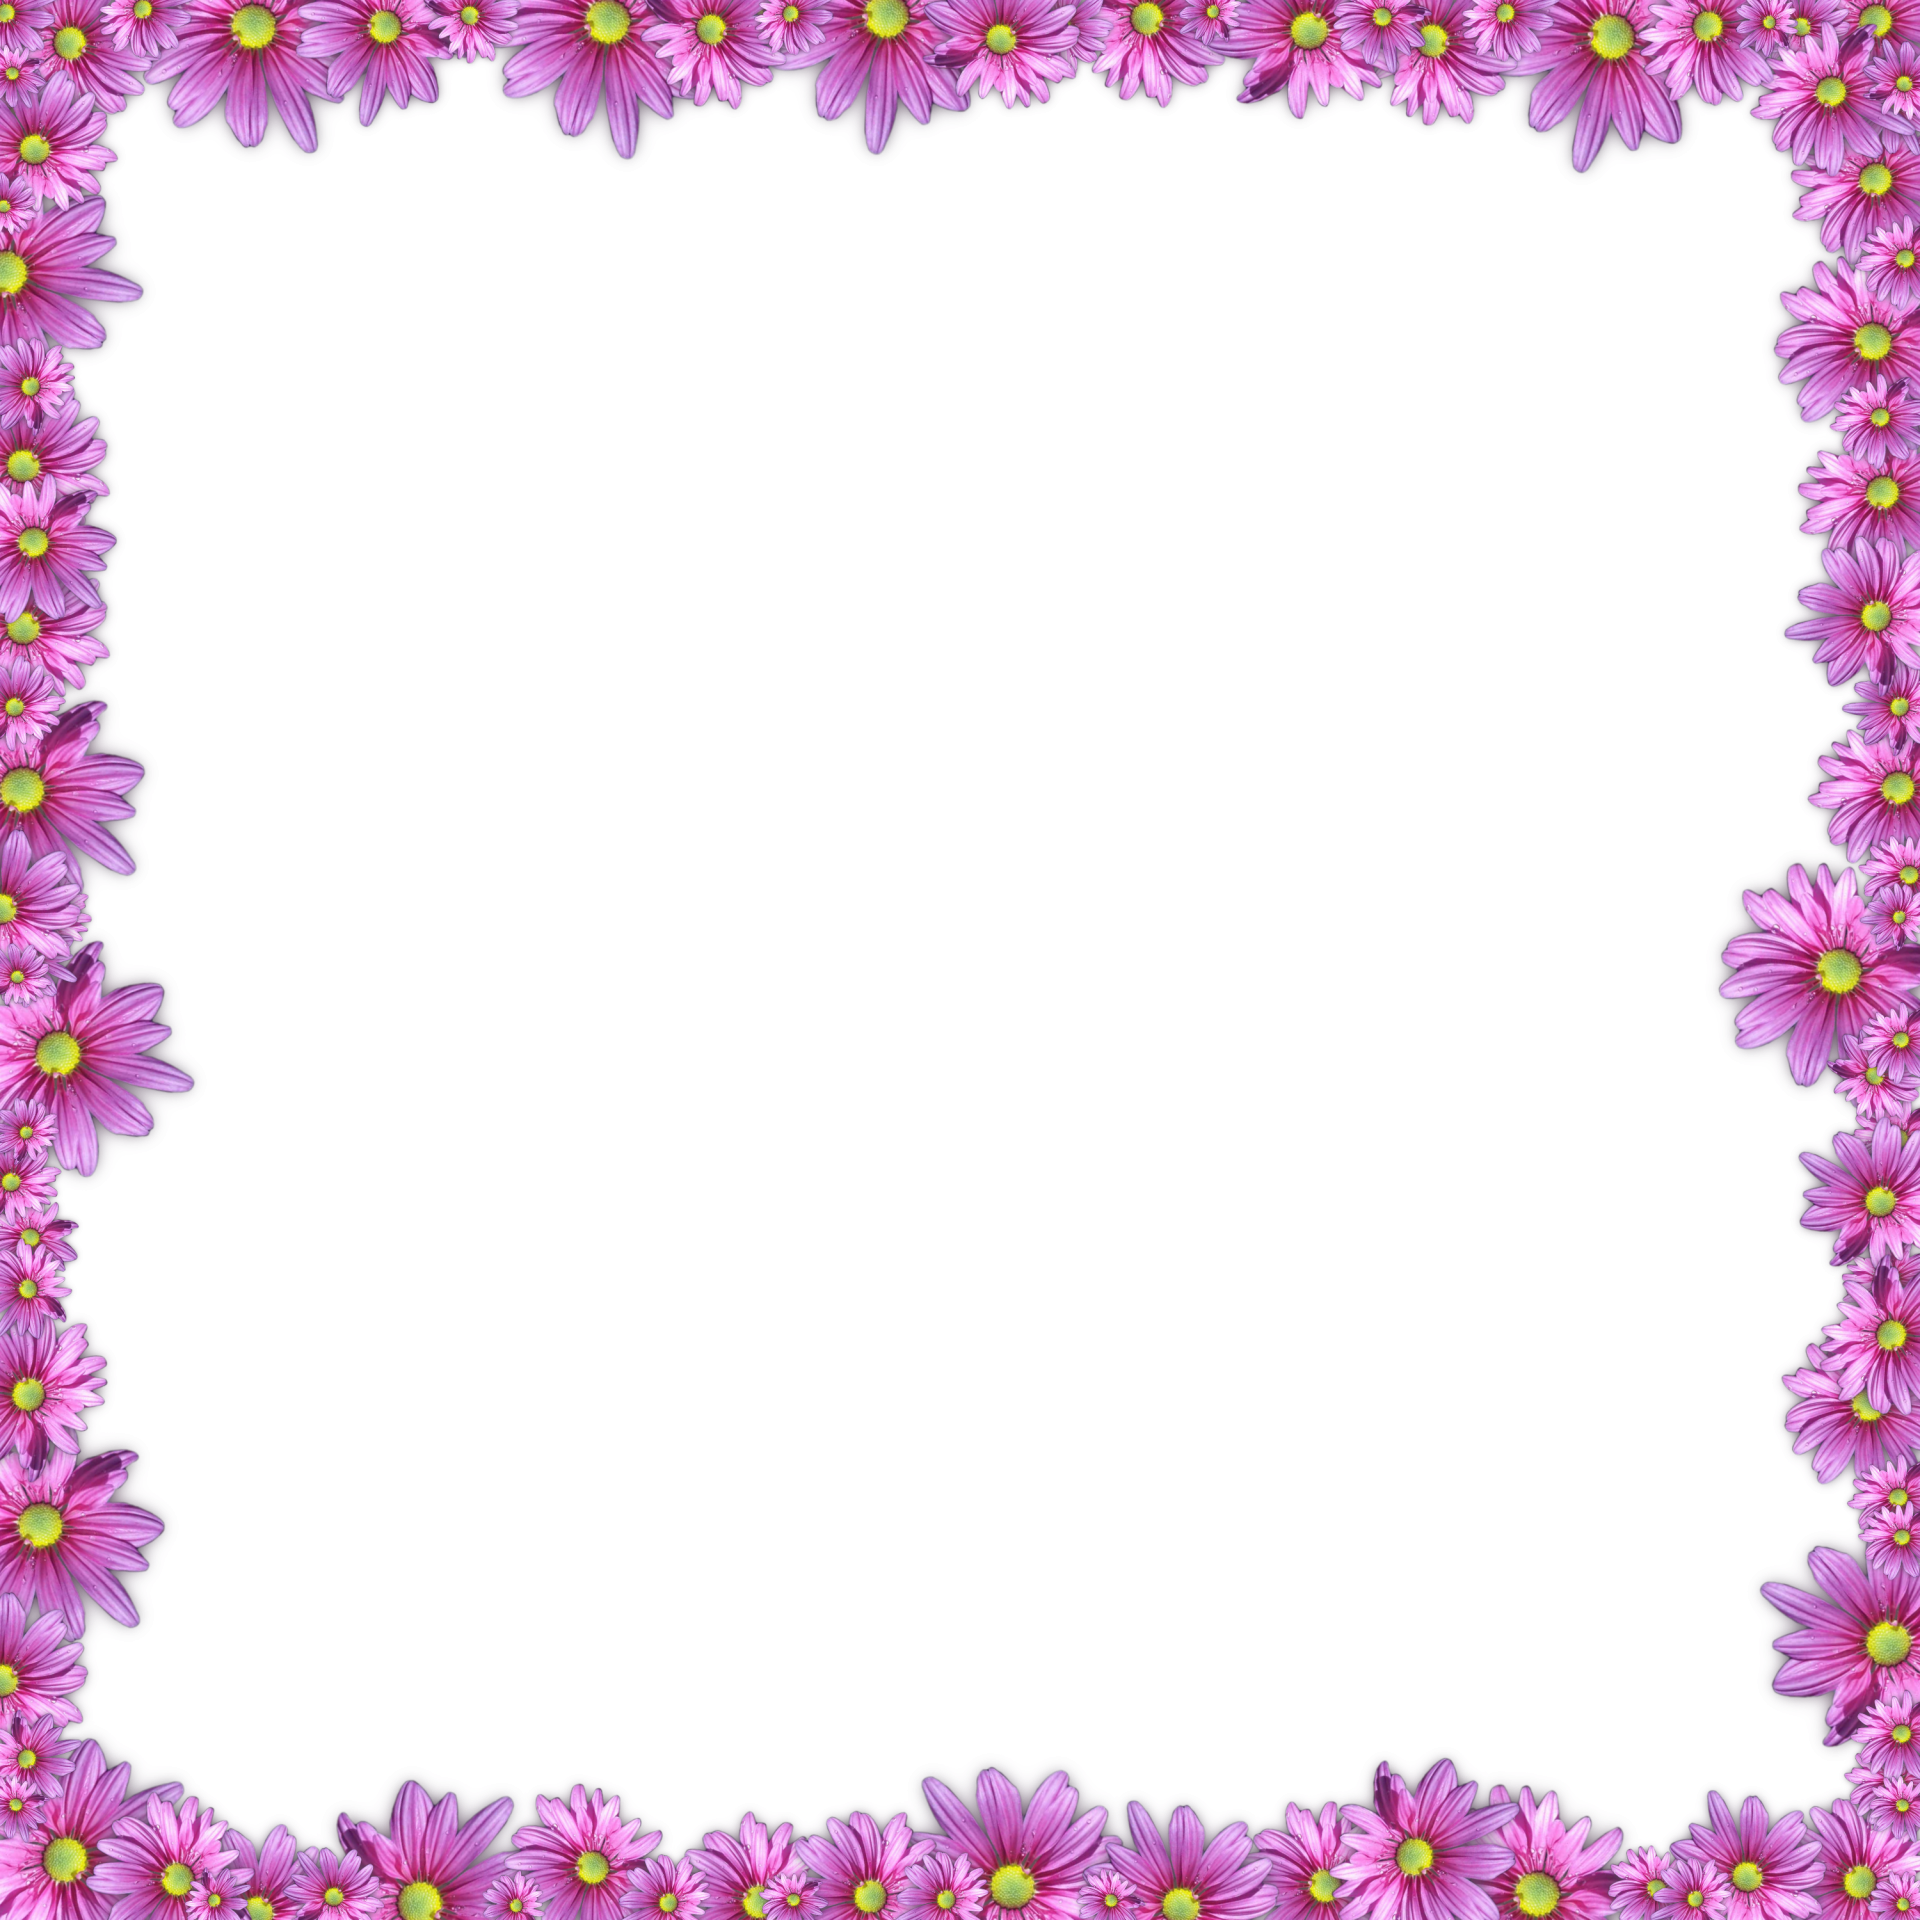 A random pink daisy frame on a transparent background.